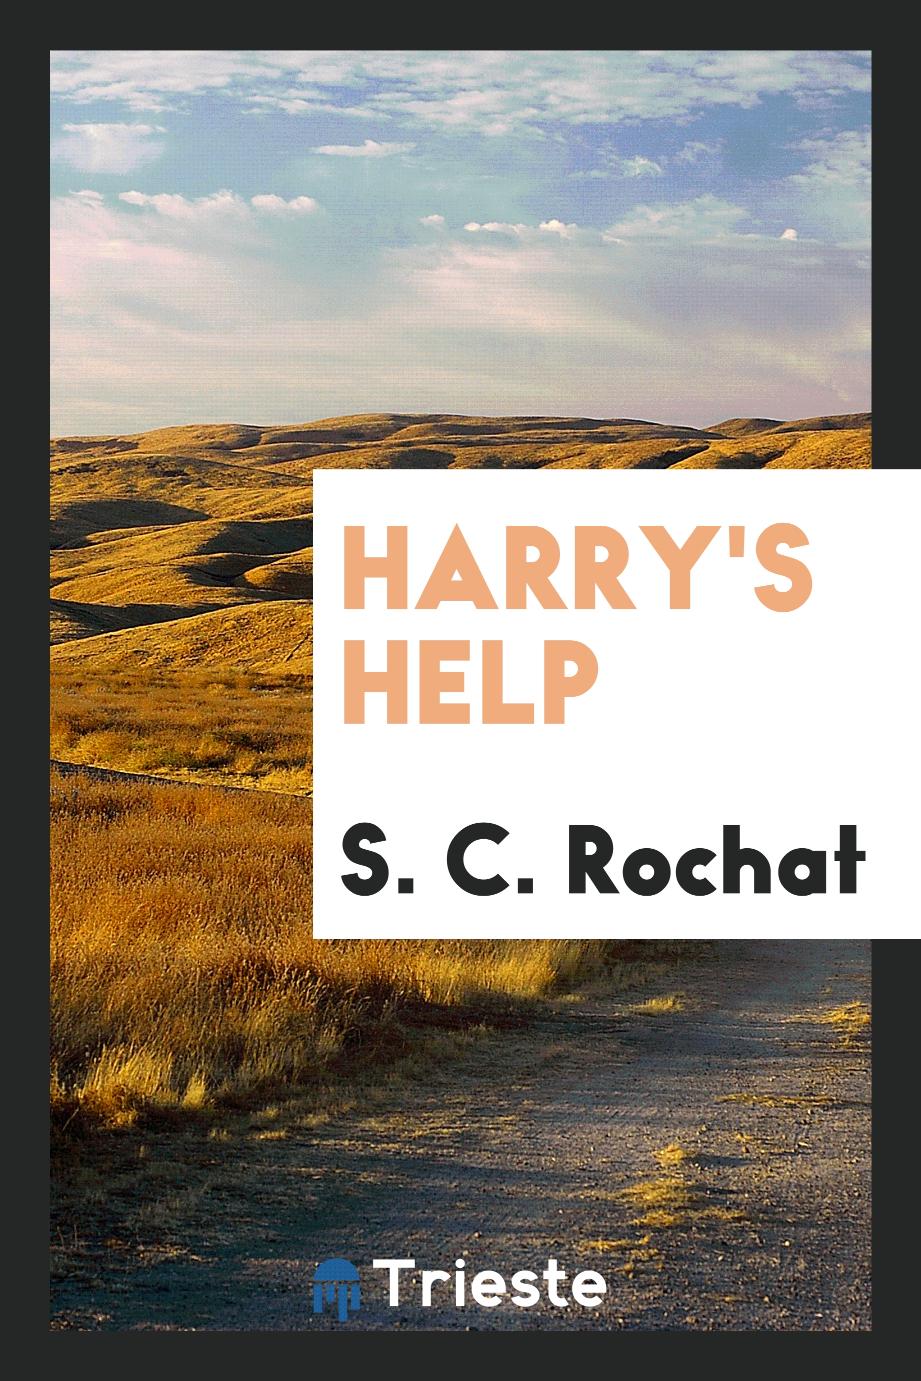 Harry's help